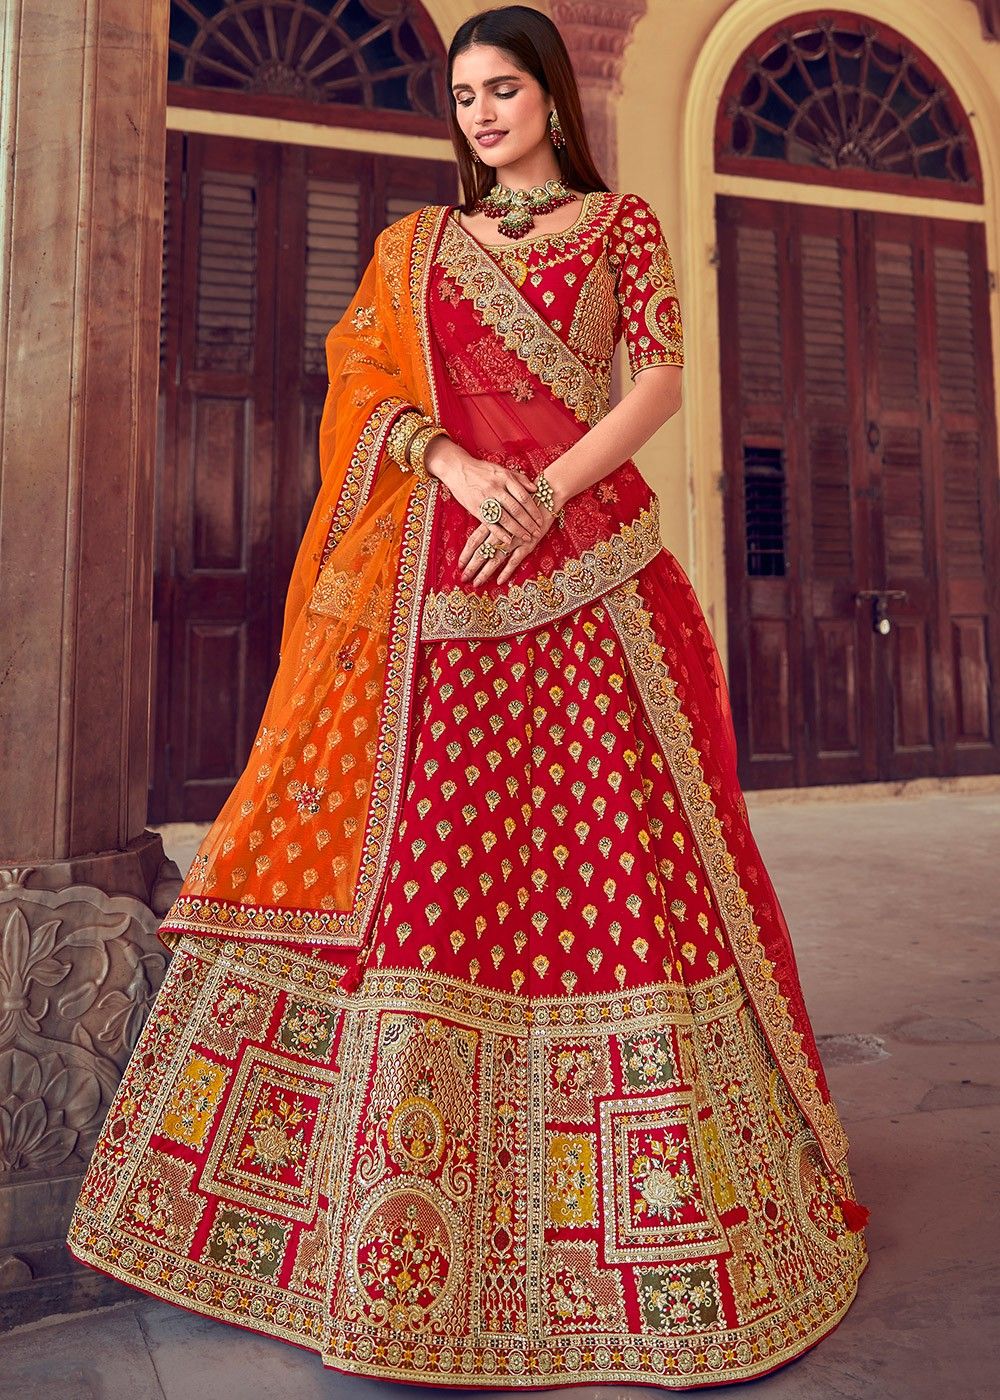 Red satin embroidered heavy designer Indian wedding lehenga choli 4708